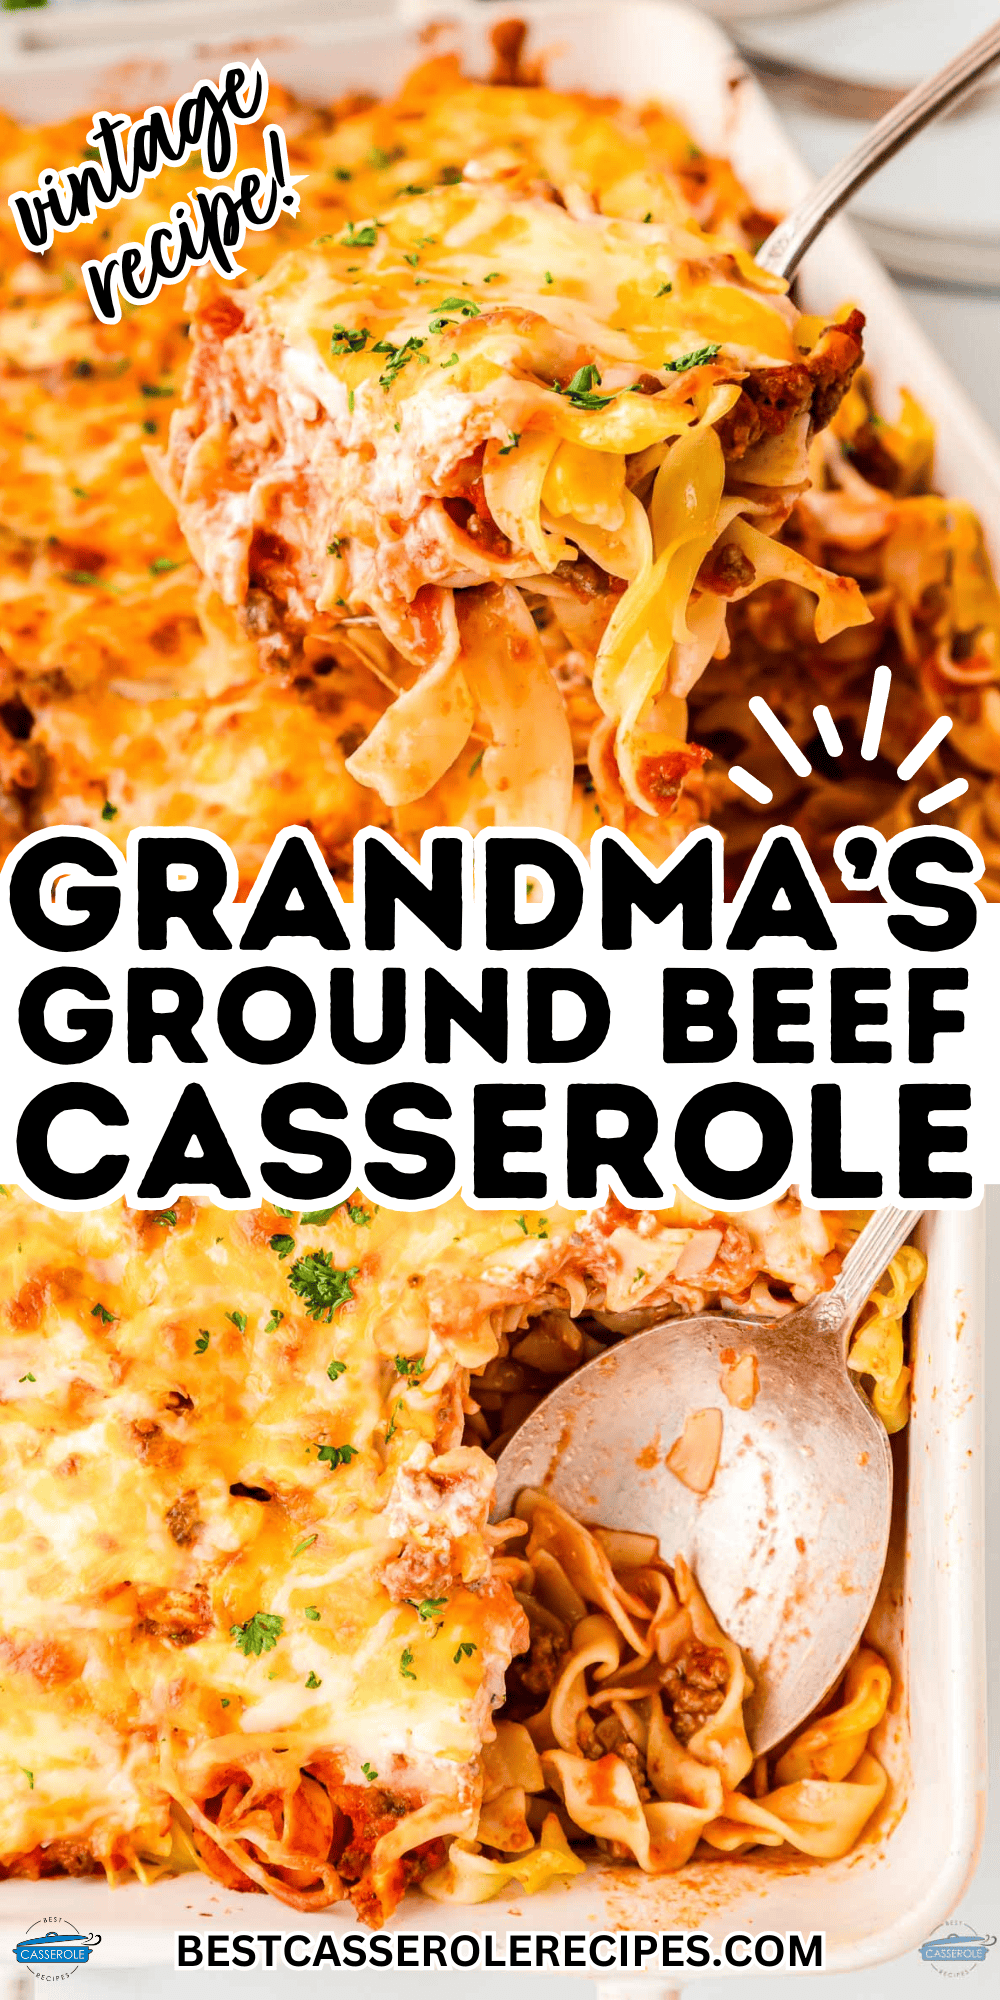 grandma's ground beef casserole recipe collage